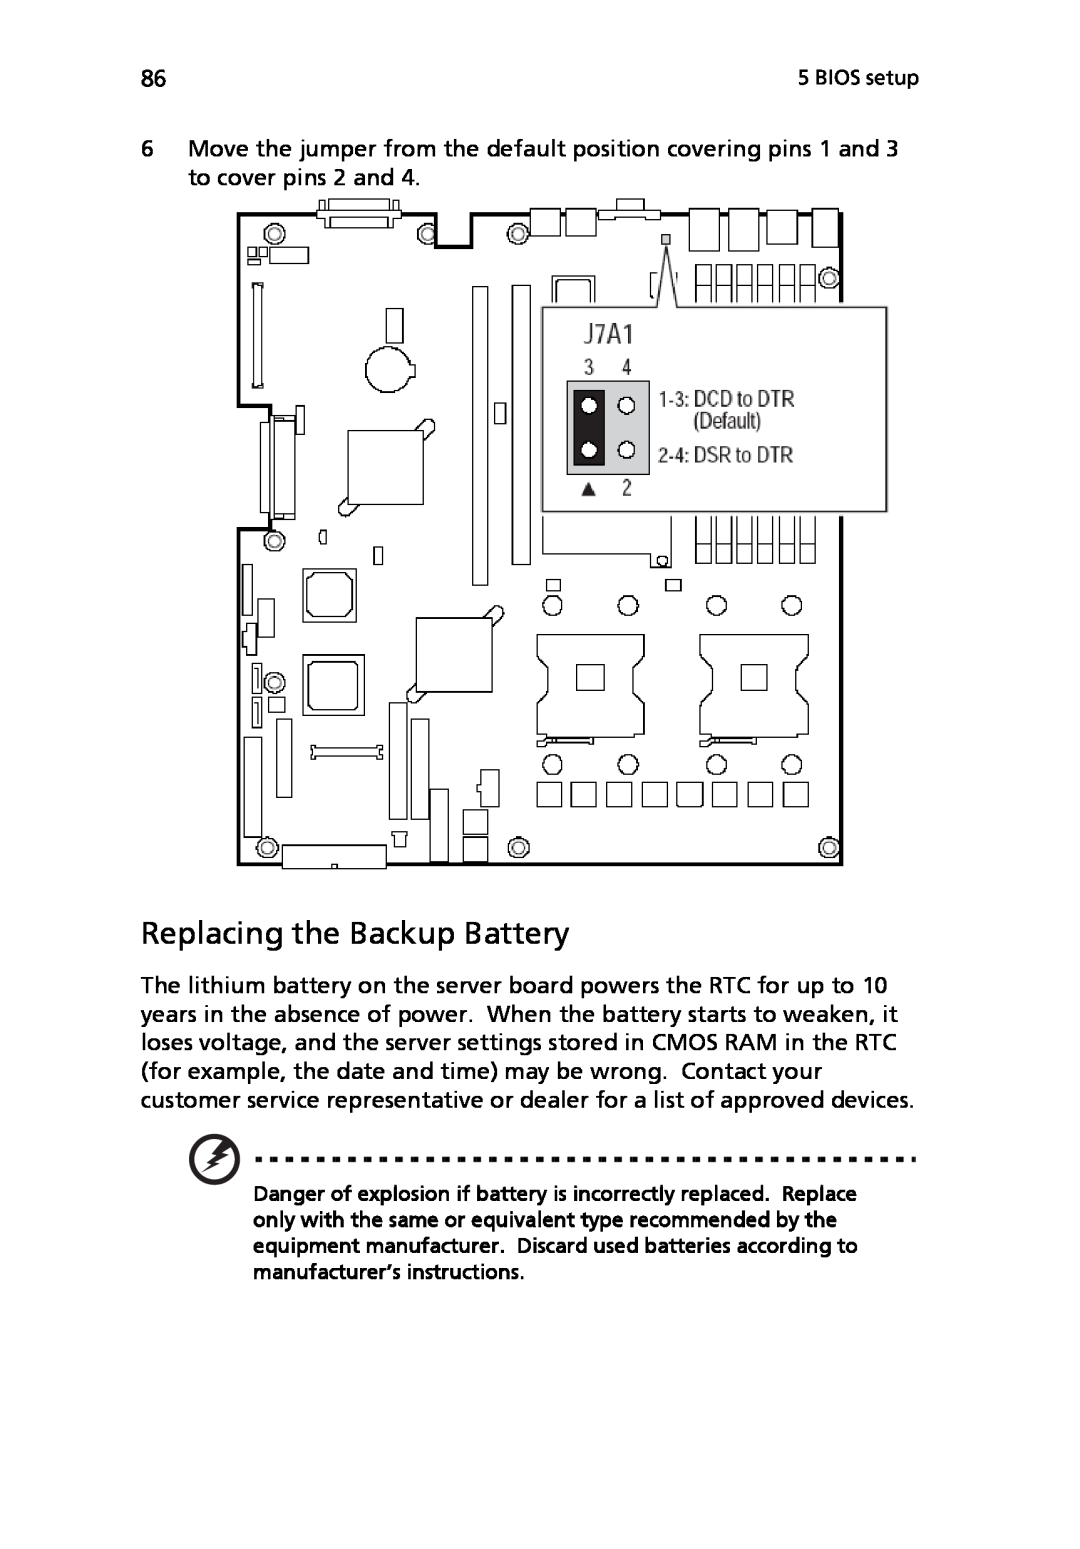 Acer Altos R710 manual Replacing the Backup Battery, BIOS setup 